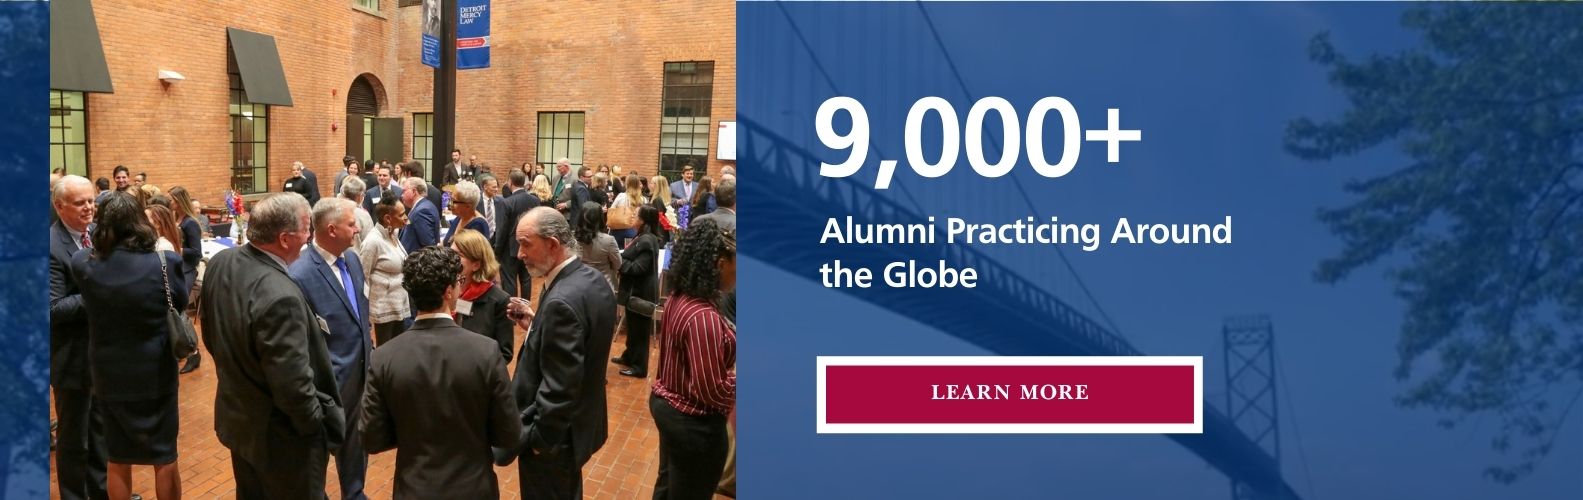 9000+ alumni practicing around the world